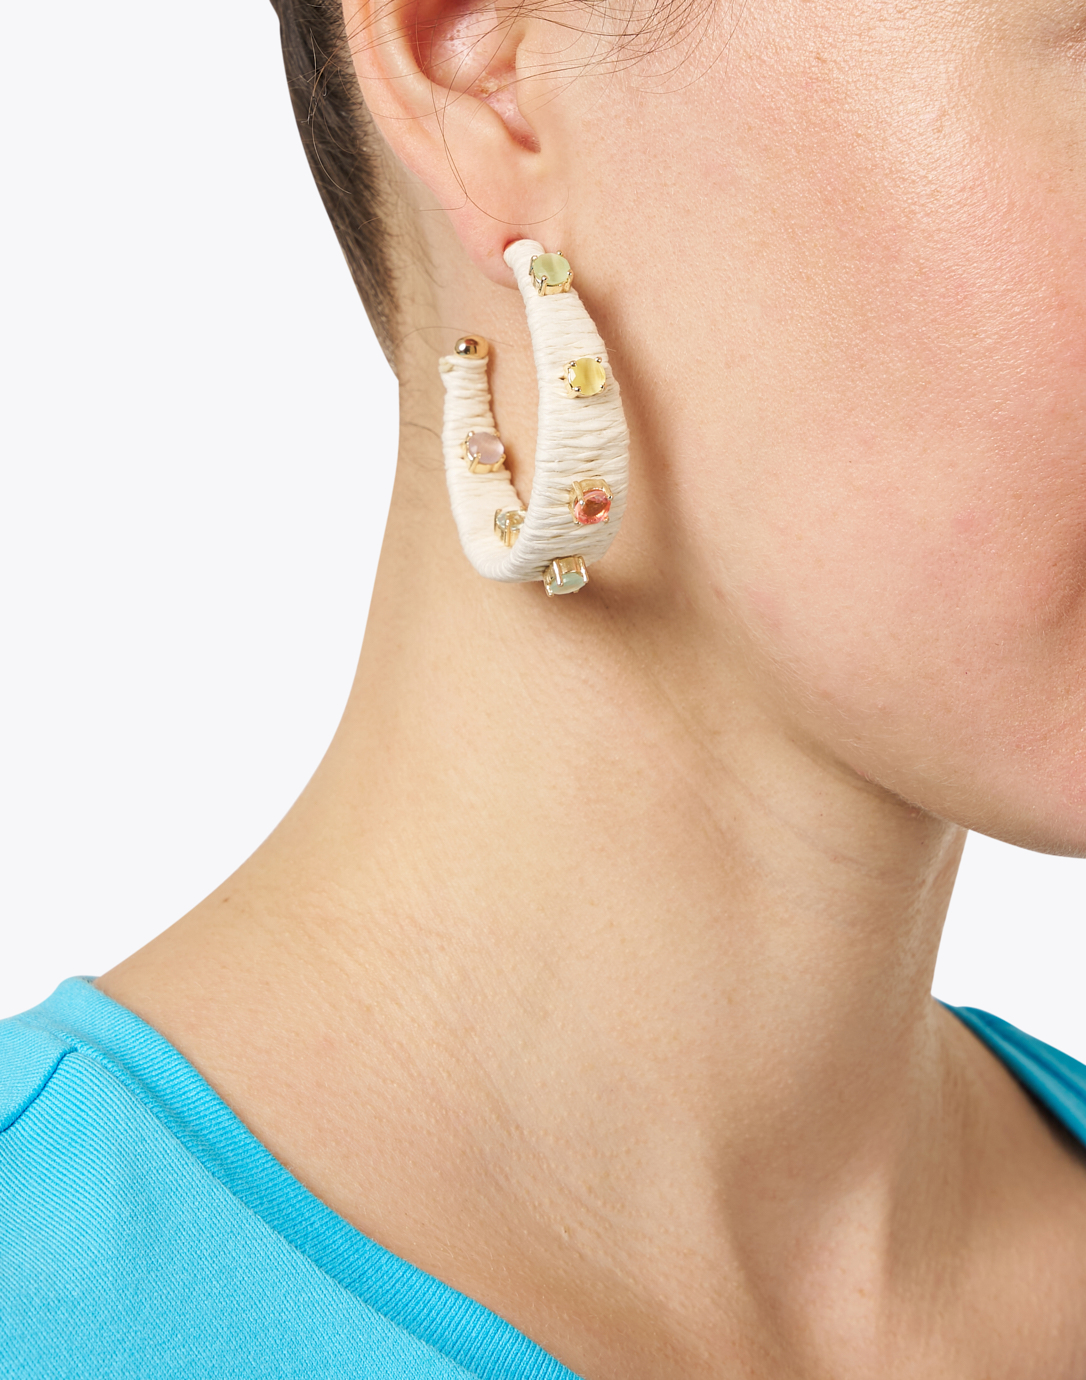 momlife #budgetfriendly #earrings #hoopearrings #designerearrings